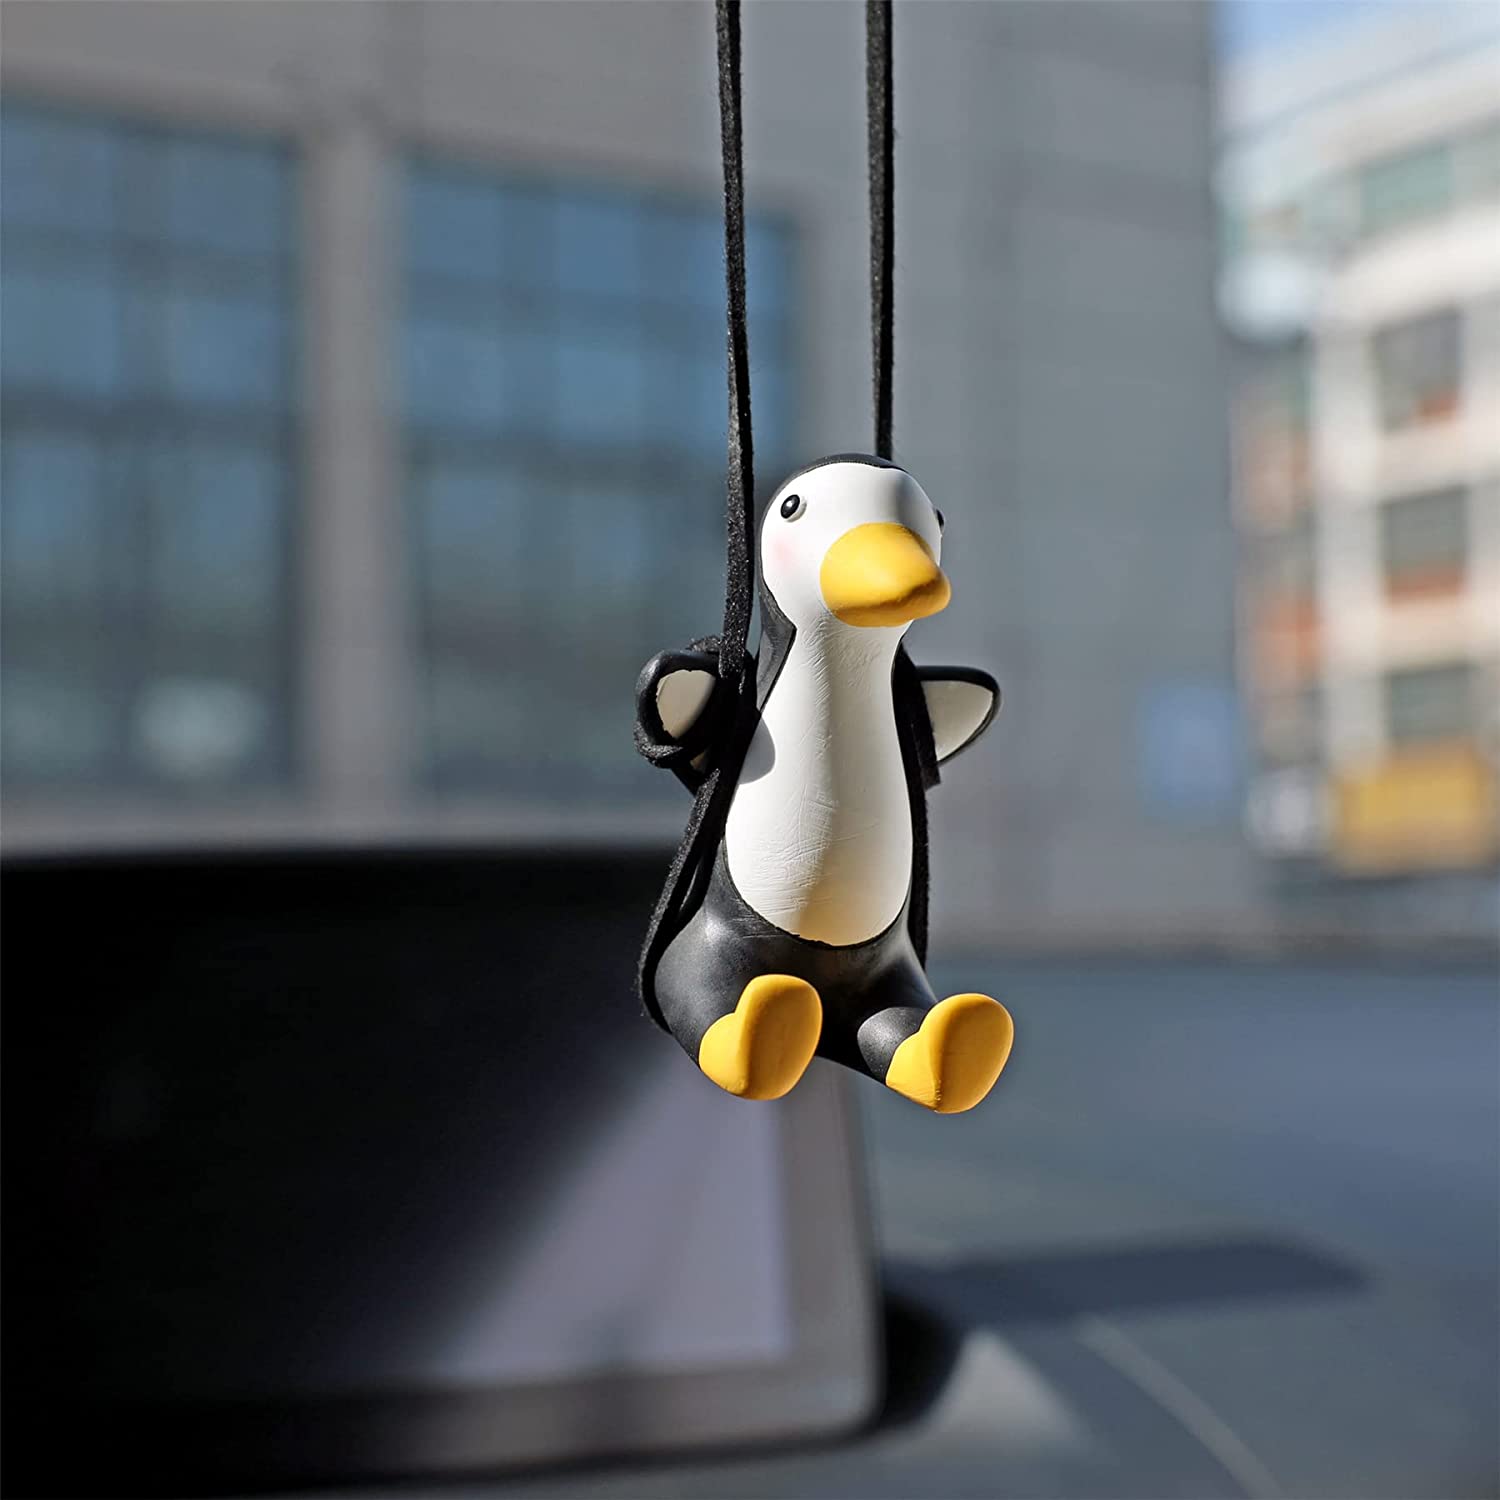 Swinging Car Penguin - Penguin rearview mirror on swing